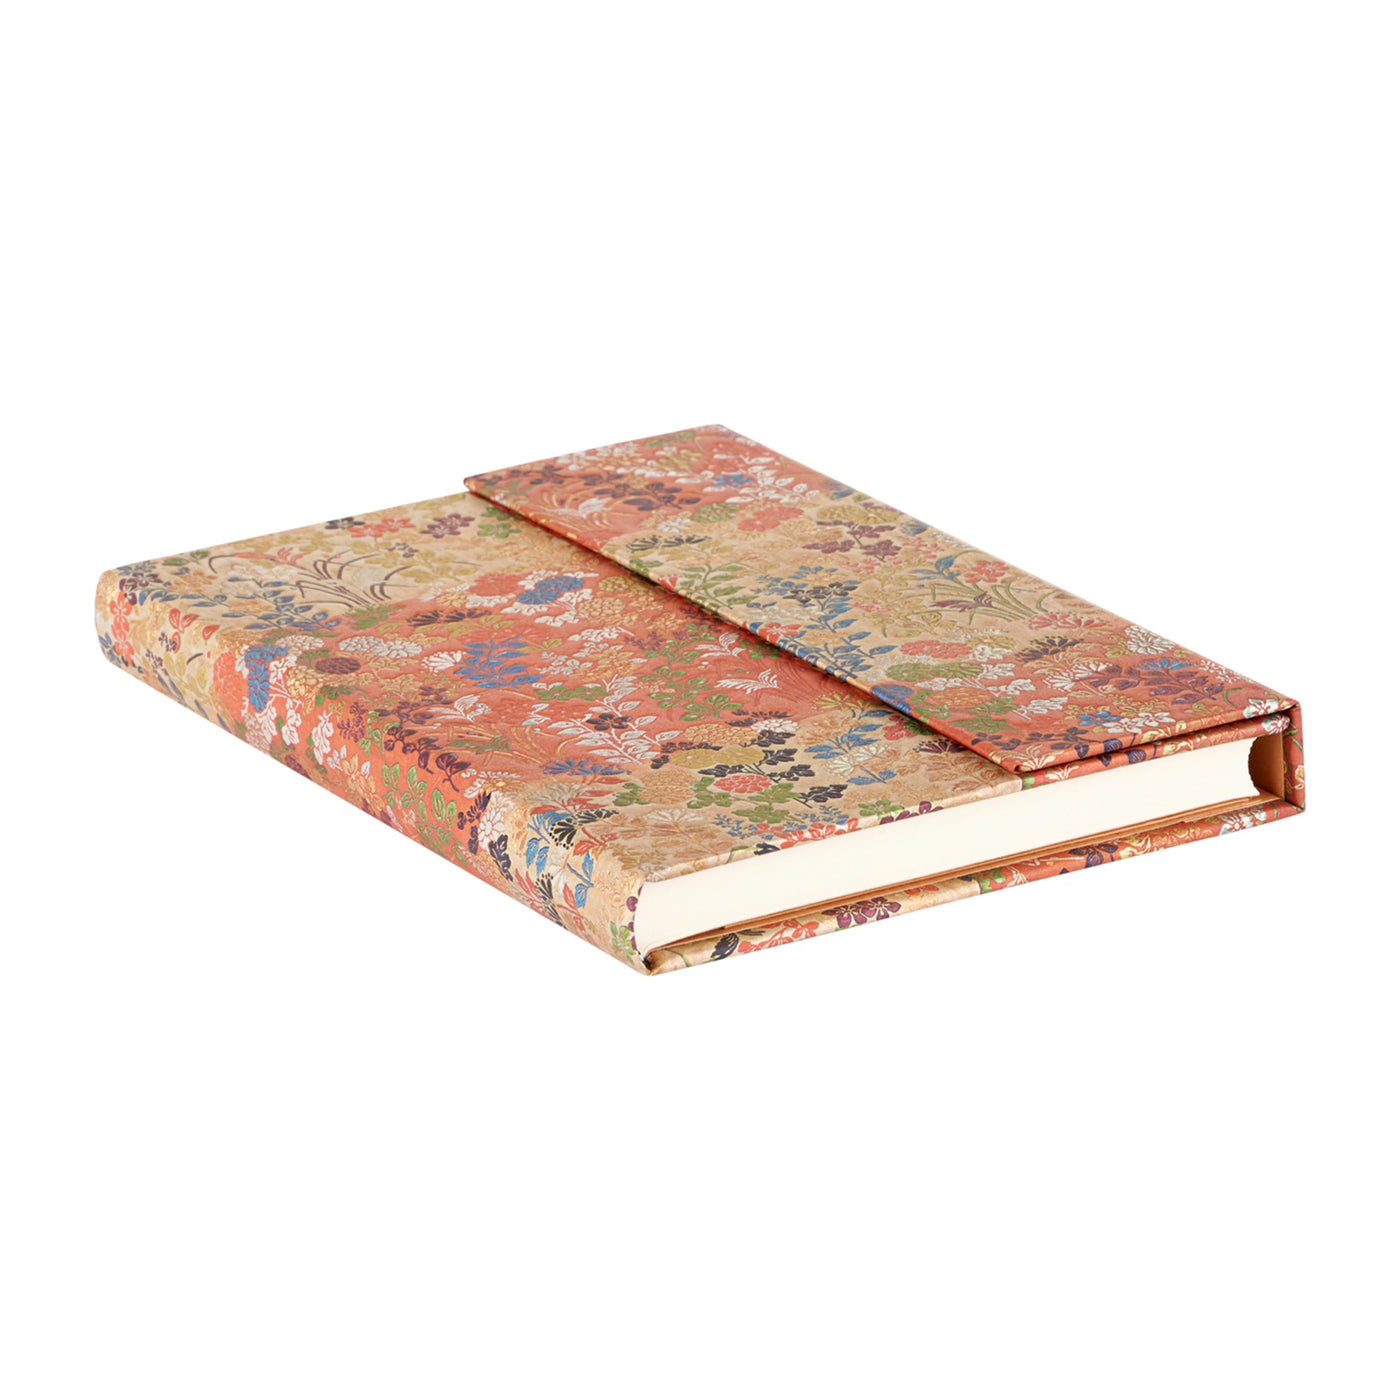 Paperblanks Kara-ori, Japanese Kimono Midi 5 x 7 Inch Address Book